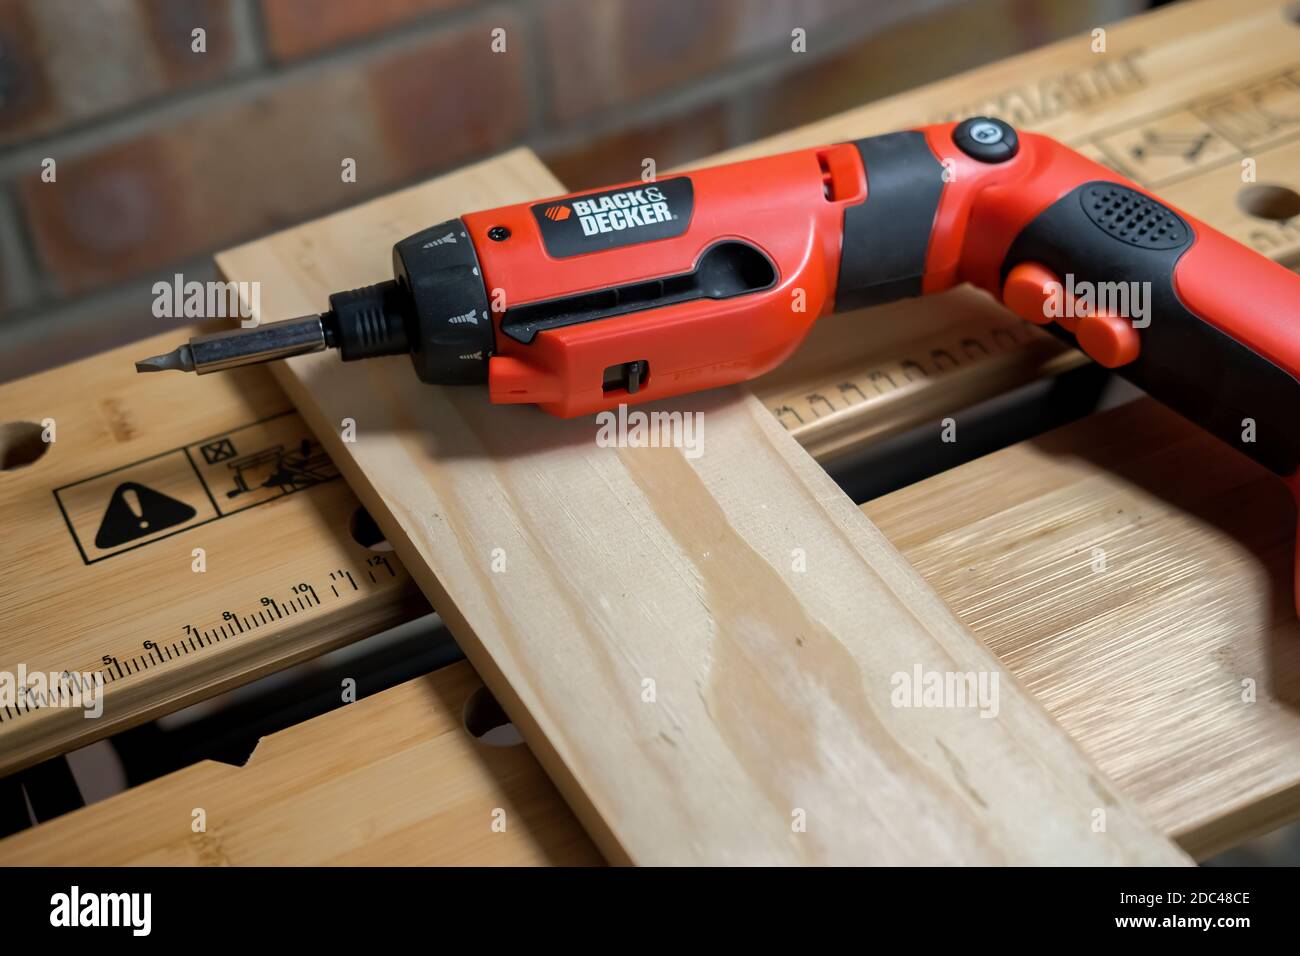 https://c8.alamy.com/comp/2DC48CE/norwich-norfolk-uk-november-17-2020-an-illustrative-photo-of-a-black-decker-cordless-power-screwdriver-on-a-black-decker-workmate-bench-2DC48CE.jpg